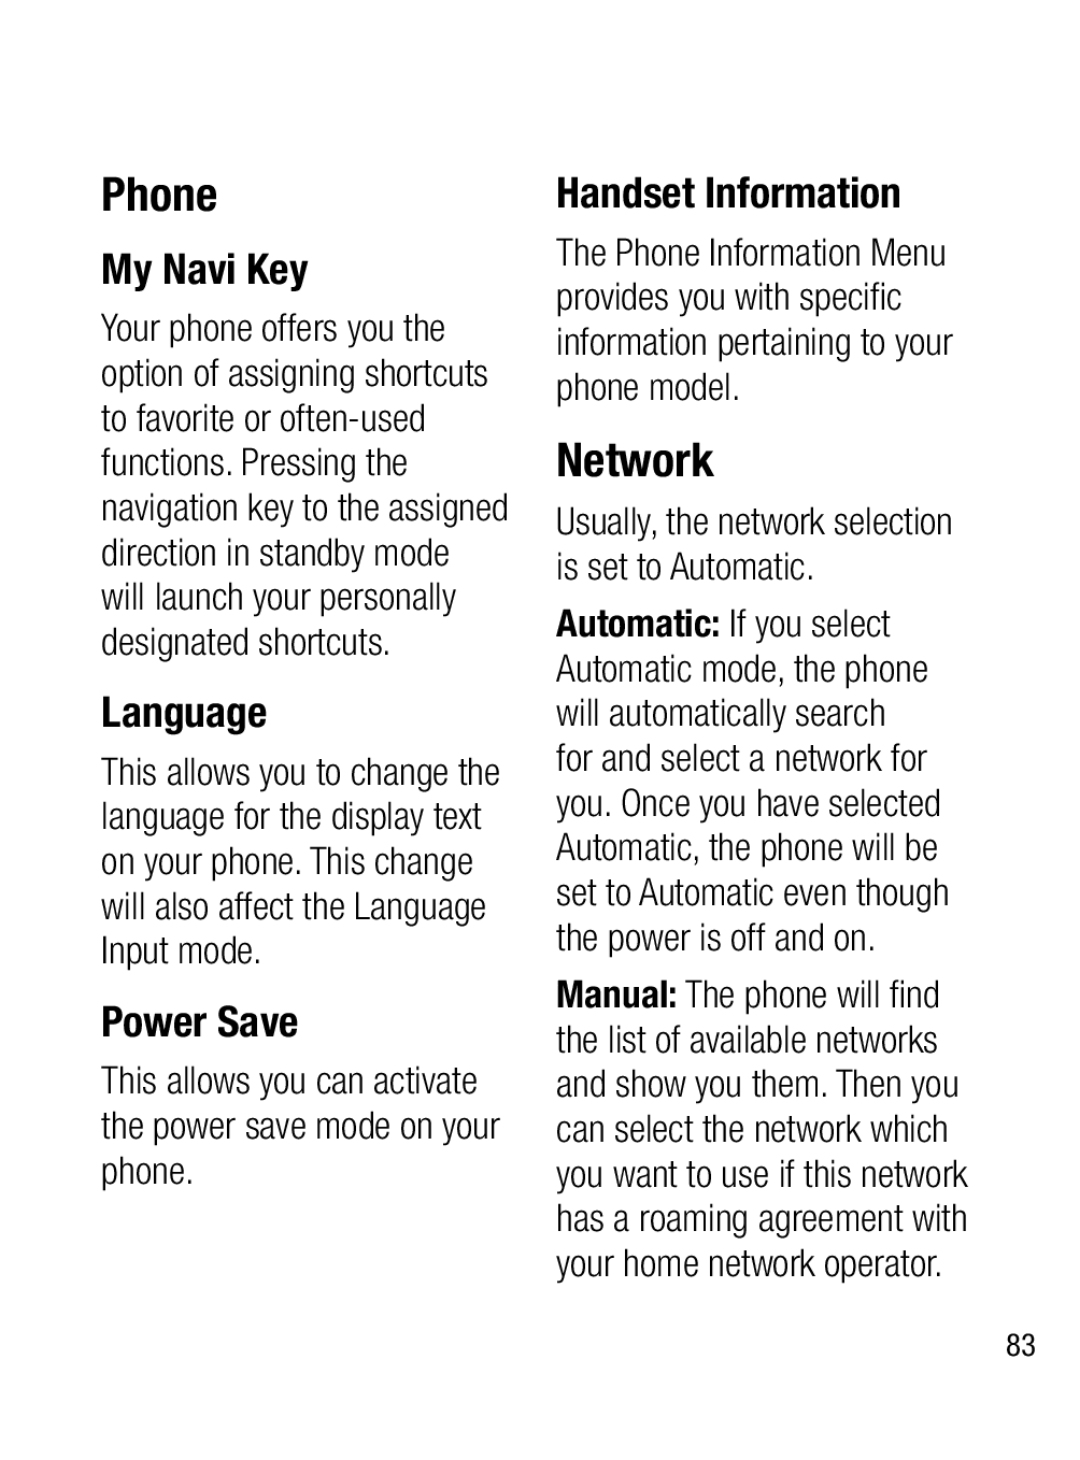 LG Electronics A133CH manual Phone, Network, My Navi Key, Language, Power Save, Handset Information 